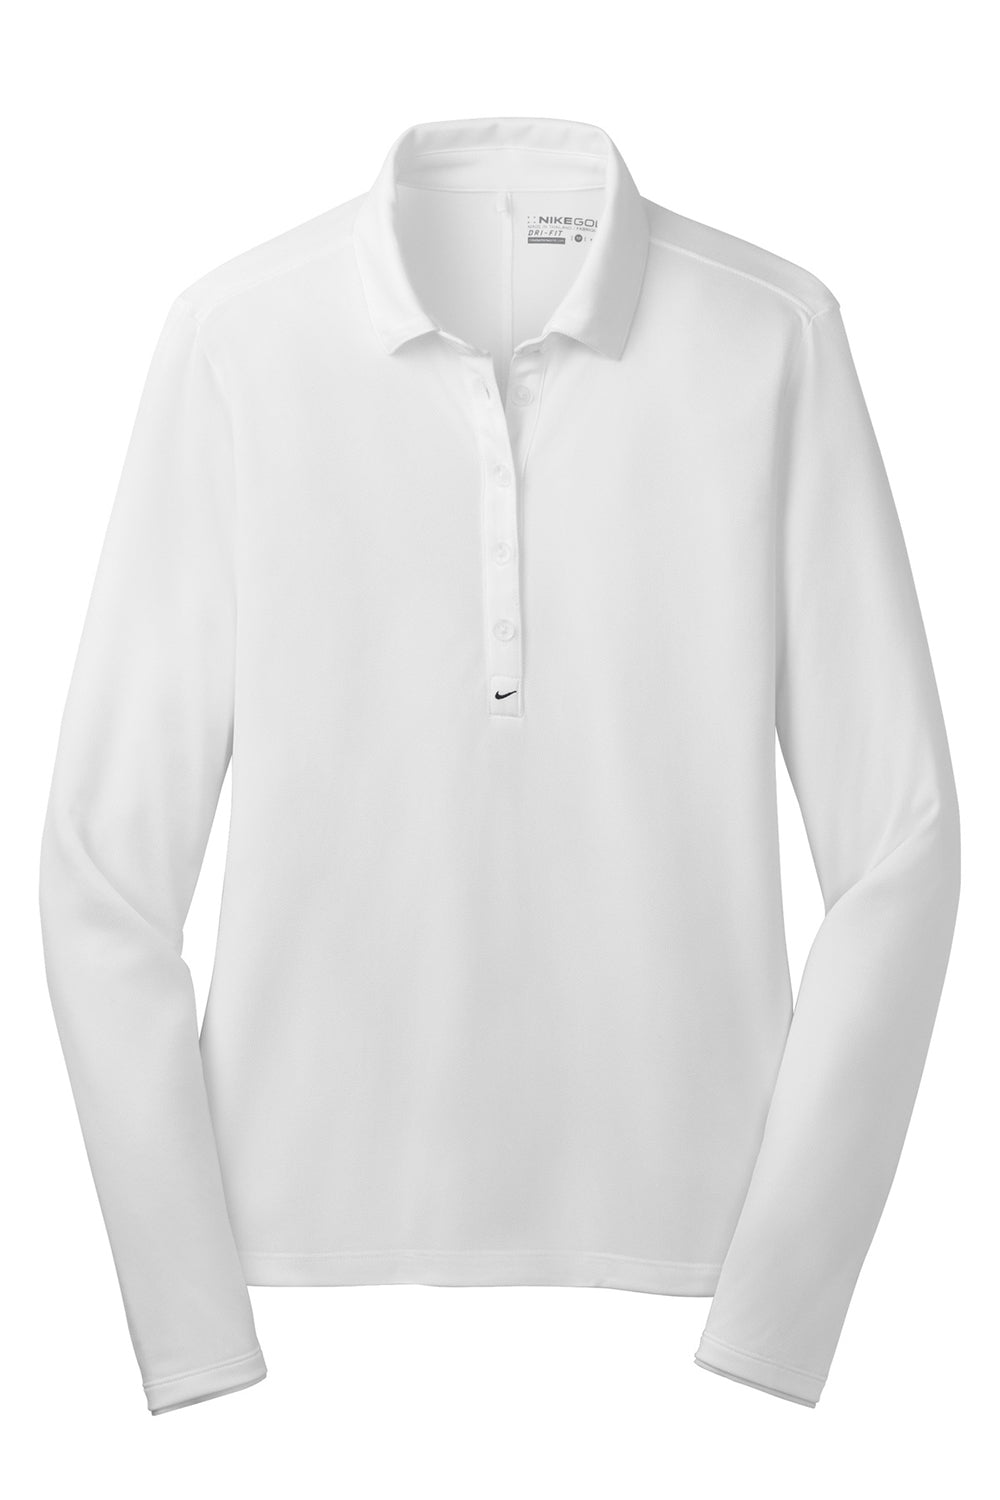 Nike 545322 Womens Stretch Tech Dri-Fit Moisture Wicking Long Sleeve Polo Shirt White Flat Front